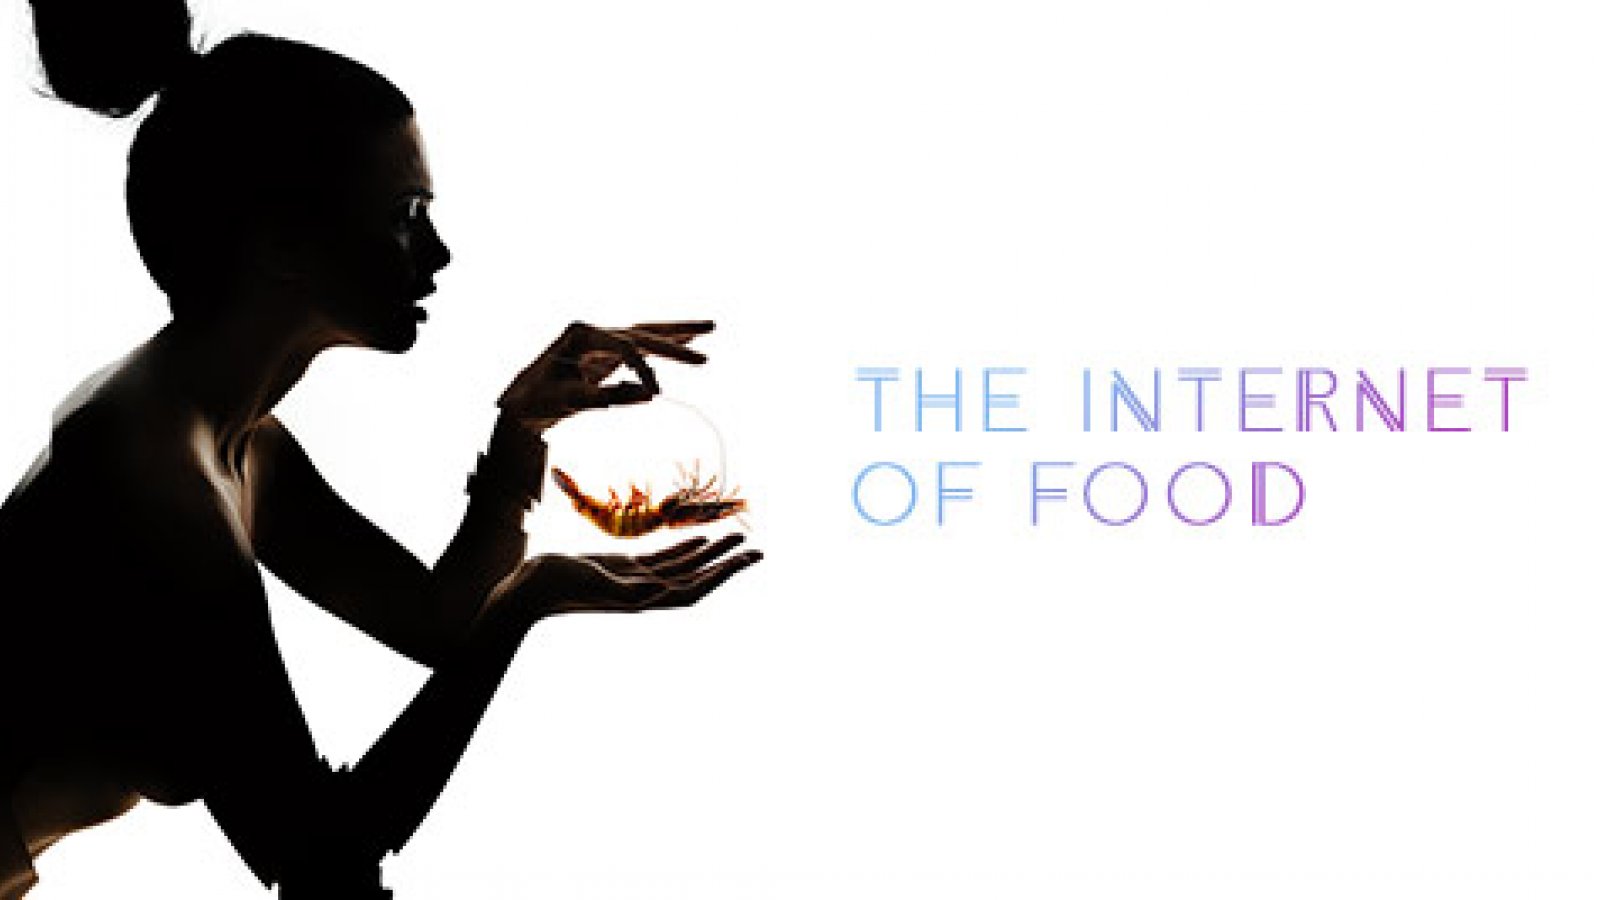 New magazine: The Internet of Food